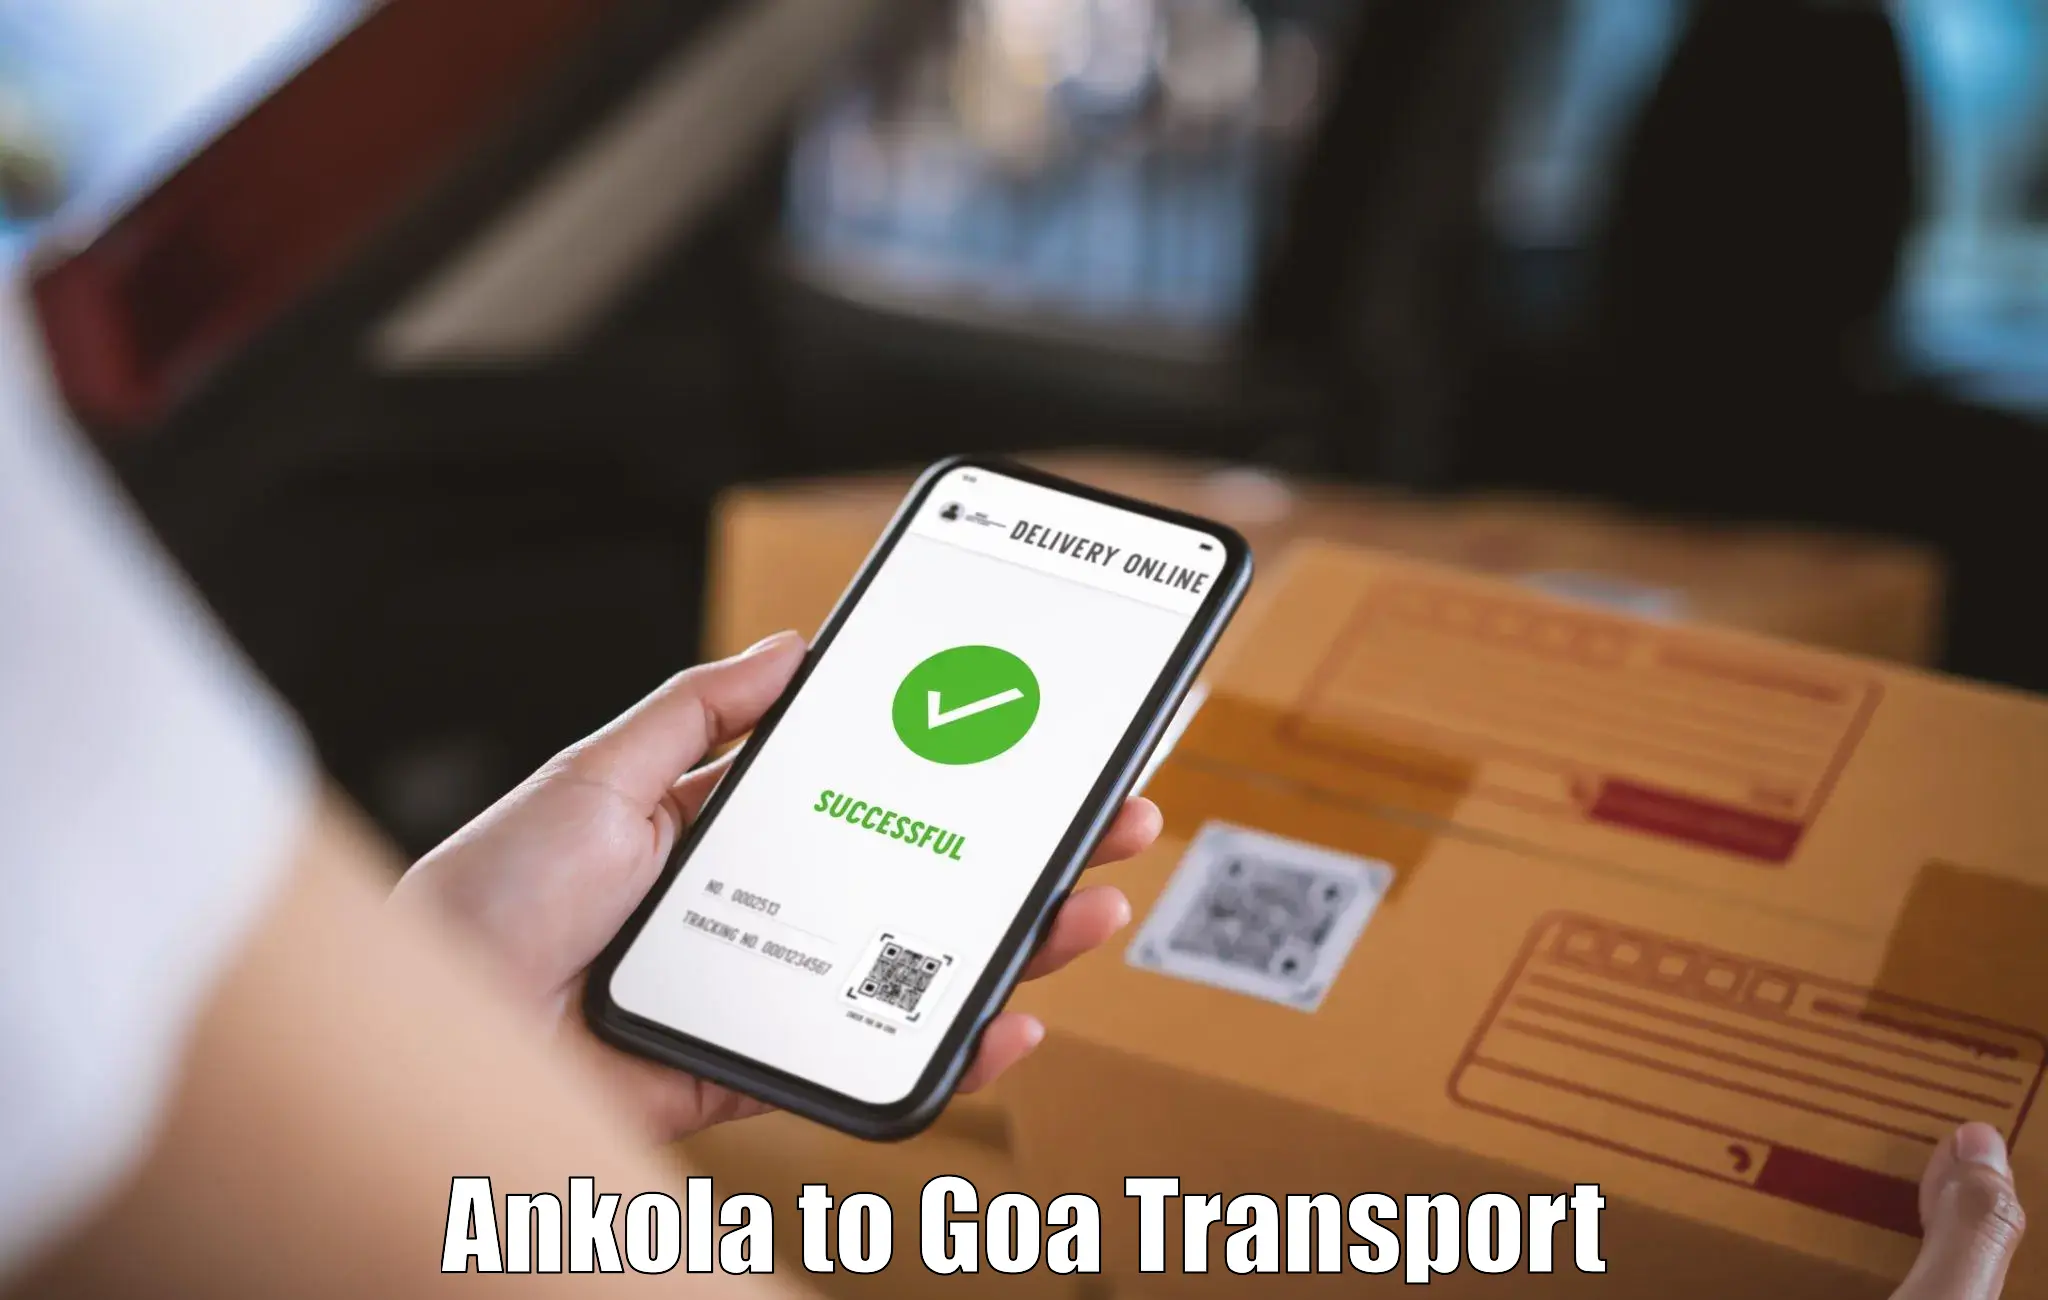 Shipping partner Ankola to South Goa